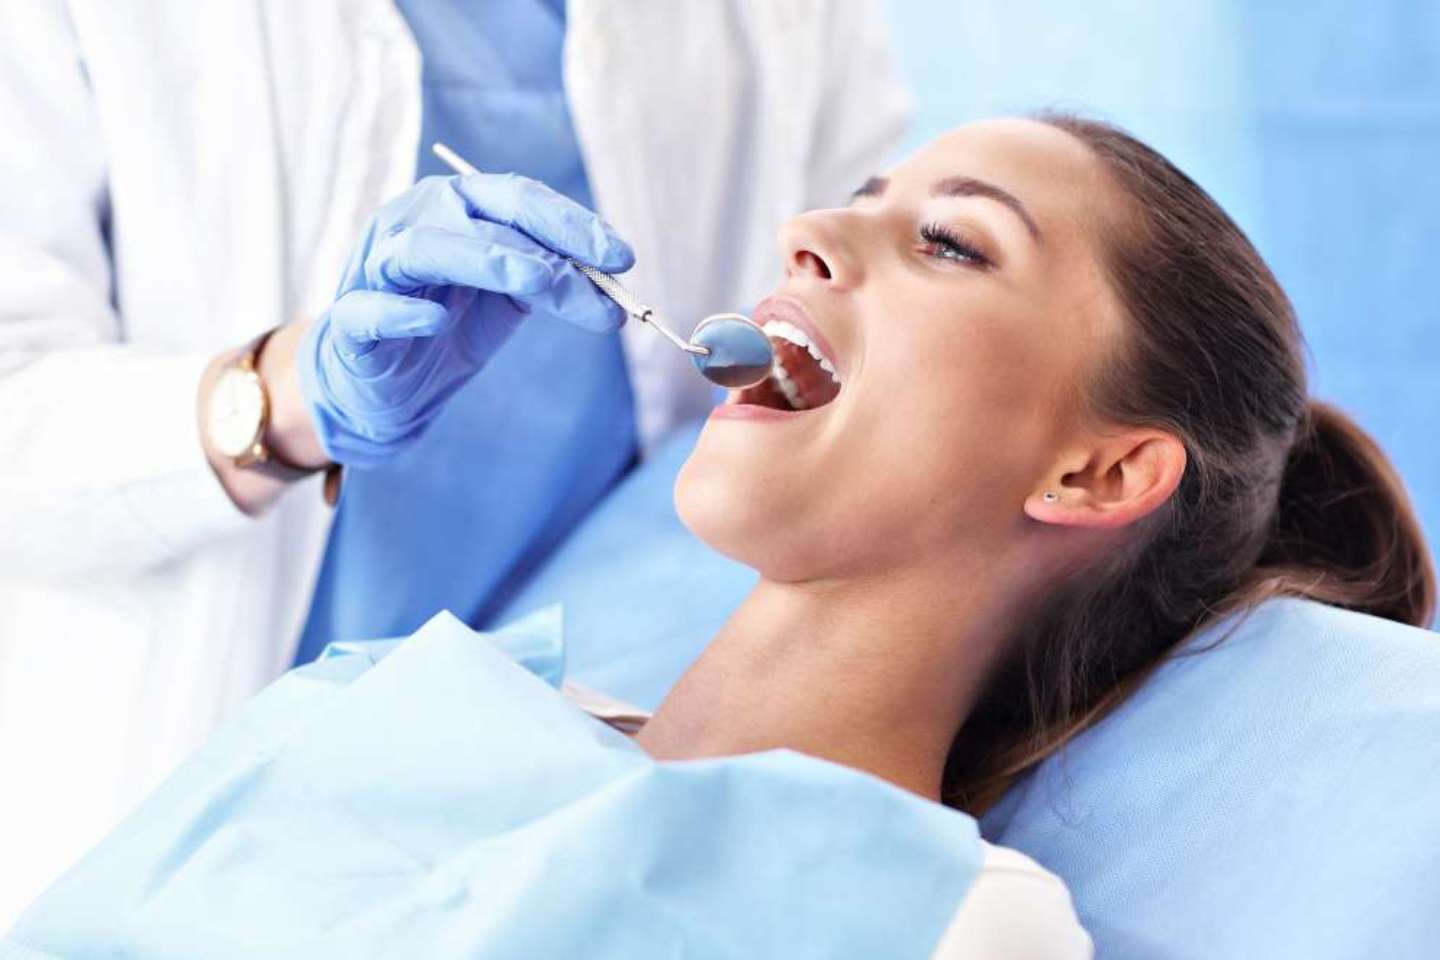 Dentist Examining A Patient's Teeth